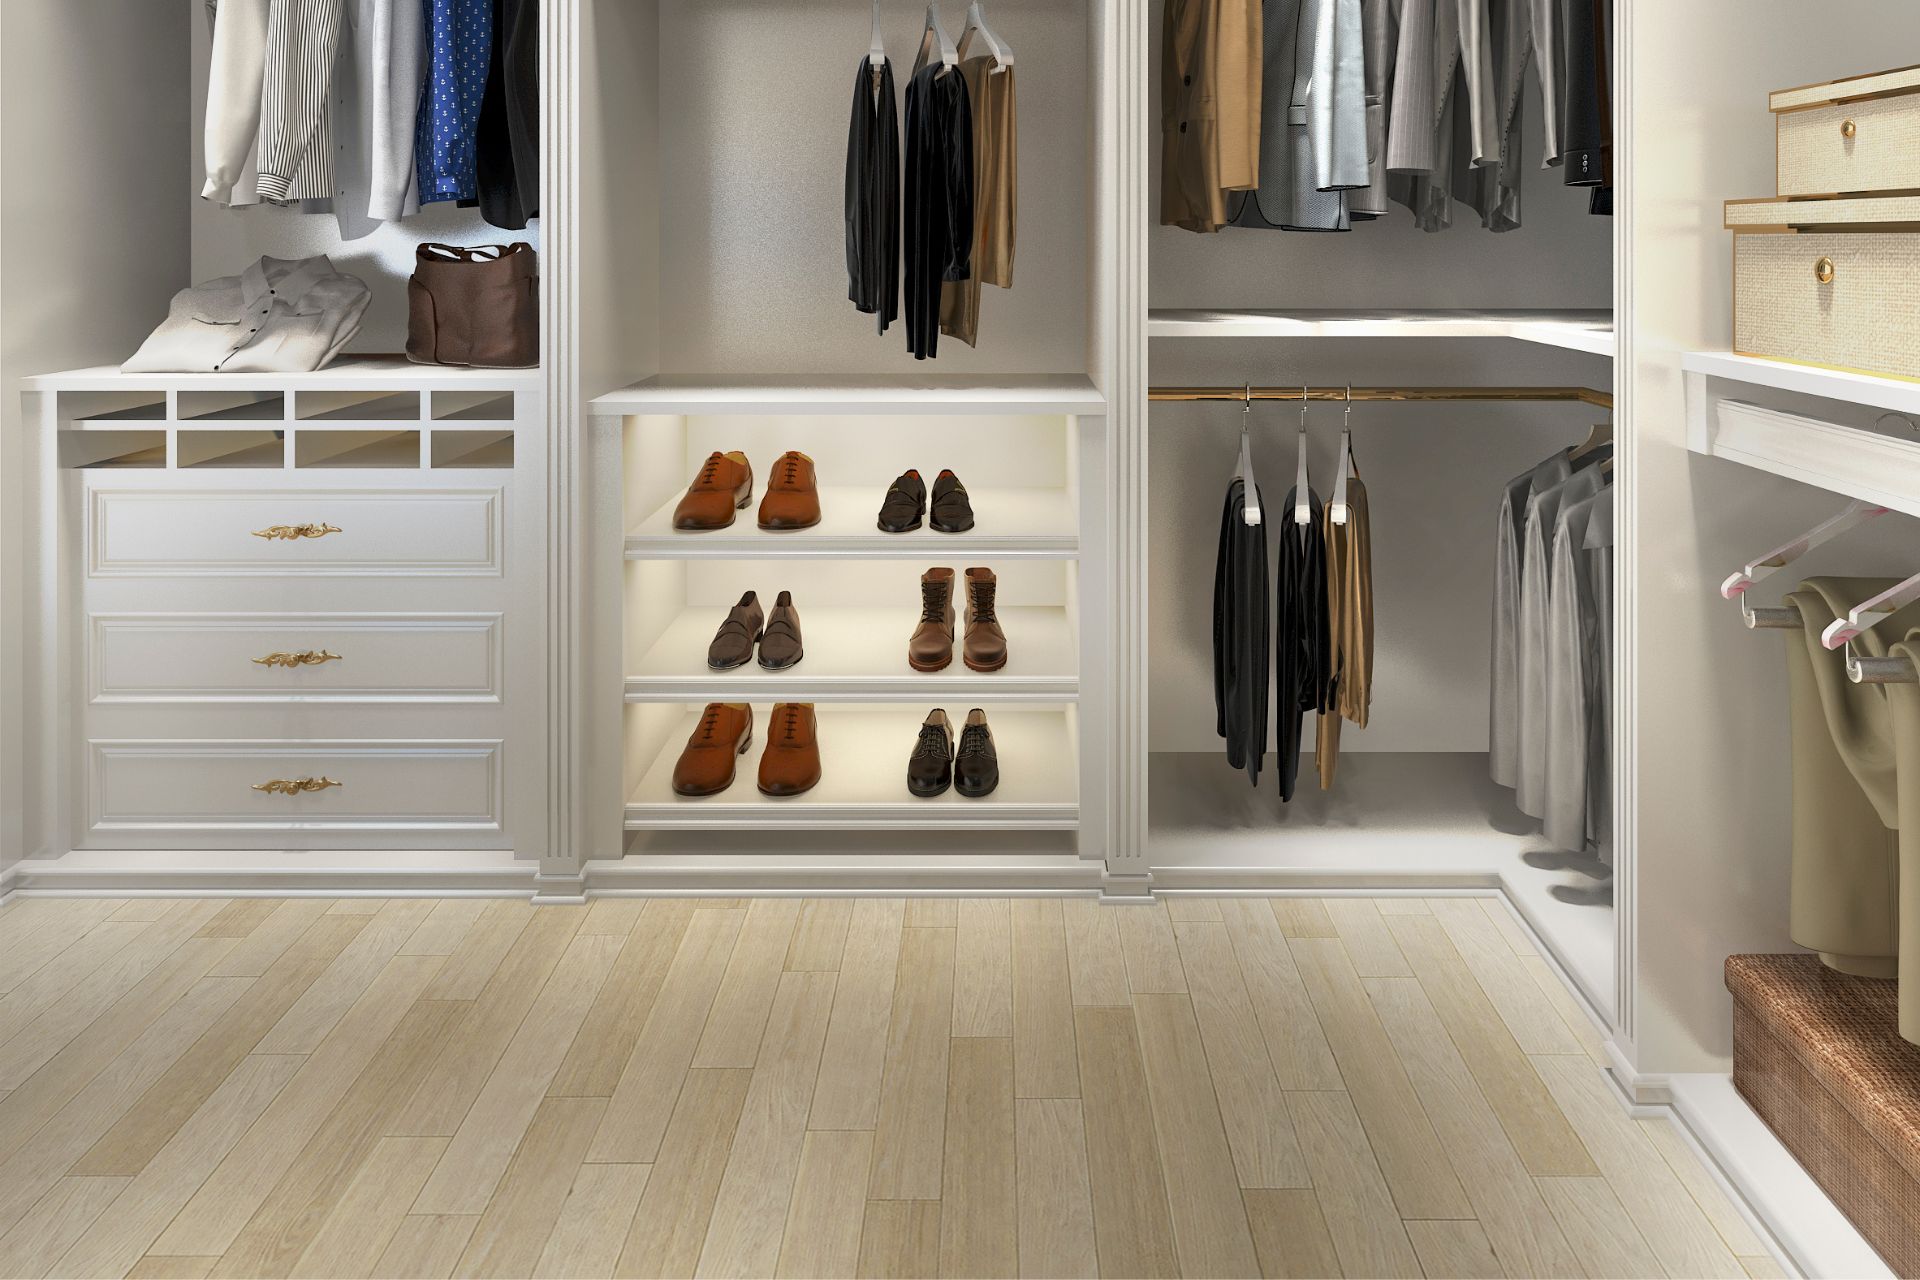 Closet Flooring: The Foundation of Your Stylish Wardrobe